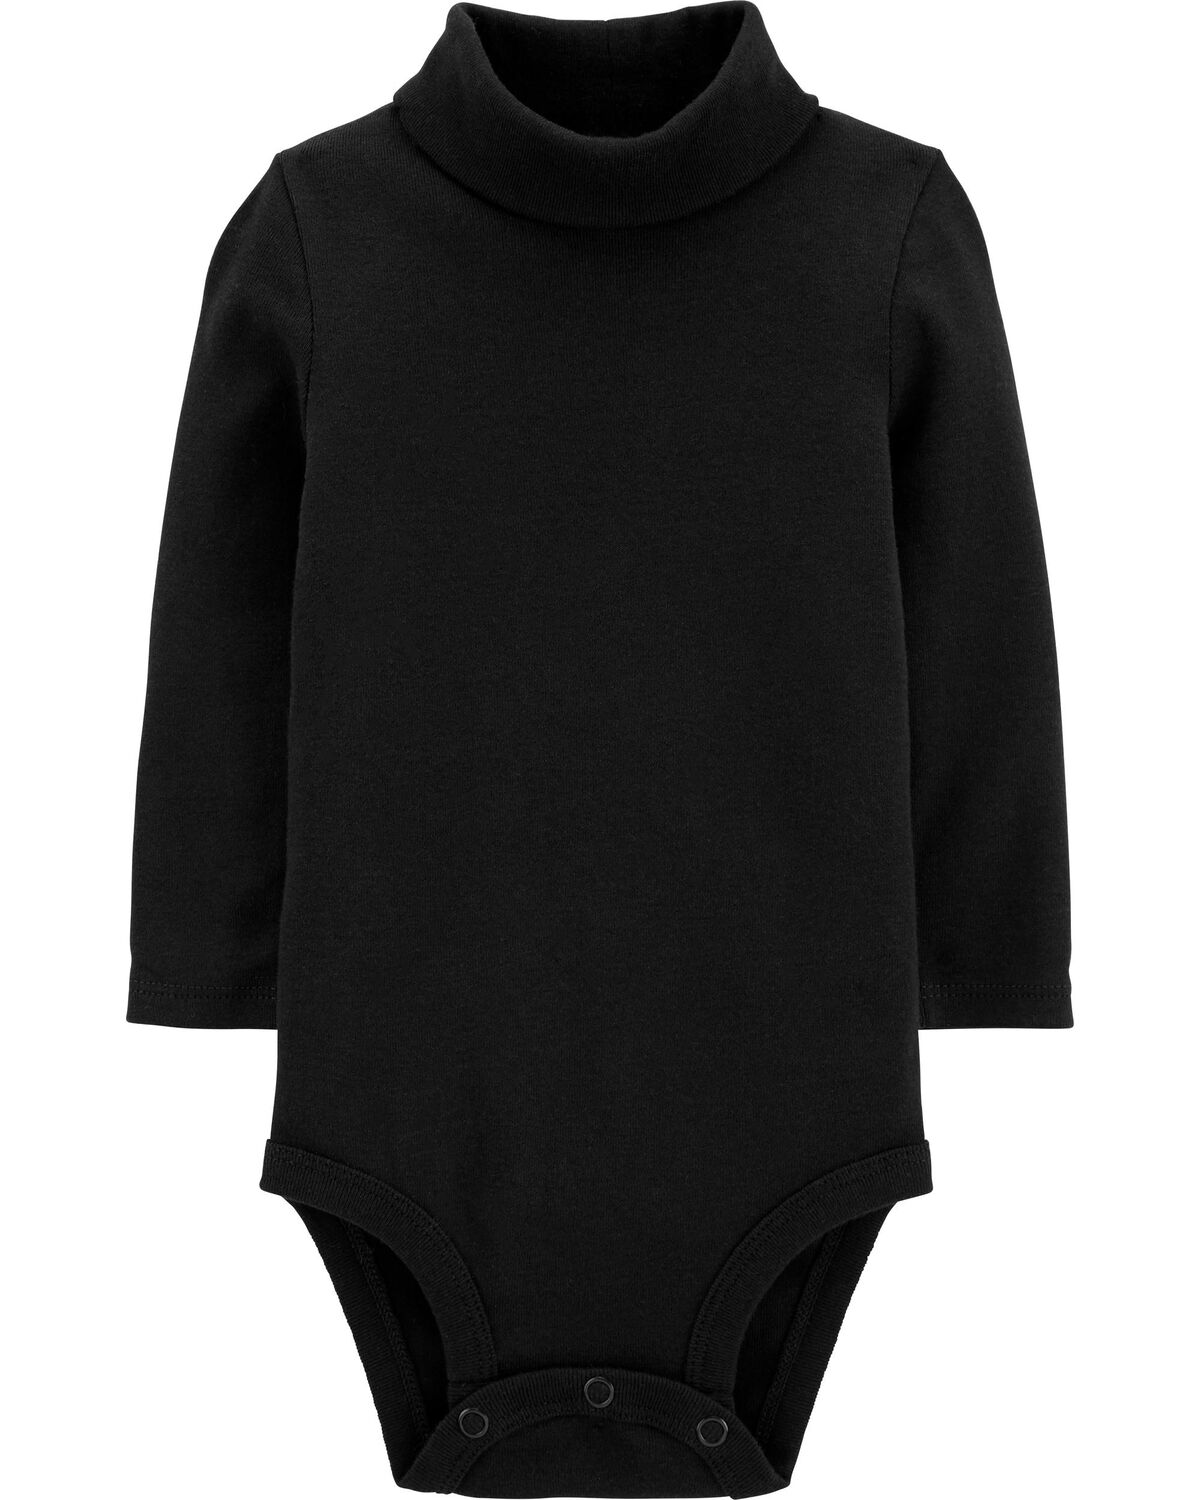 Black Baby Turtleneck Bodysuit | carters.com